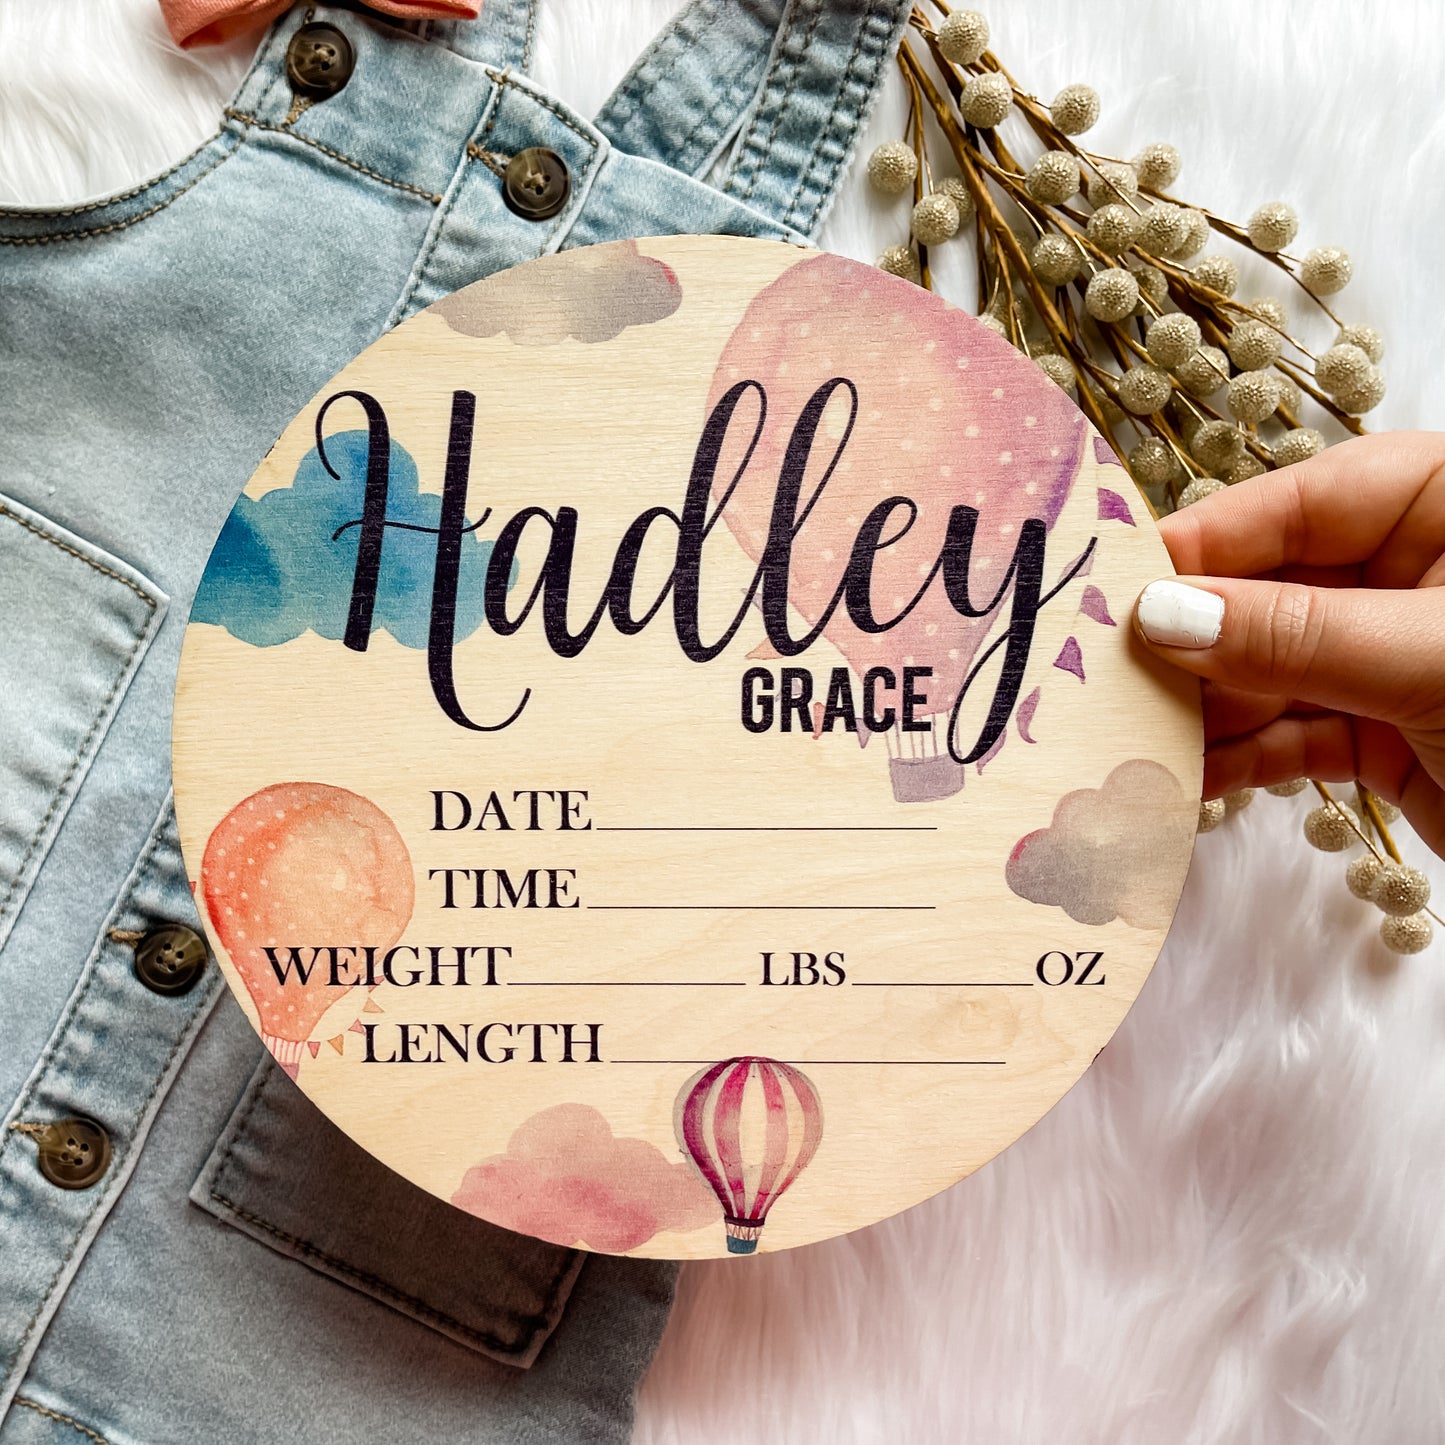 Hadley Grace Hot Air Balloon Birth Stat